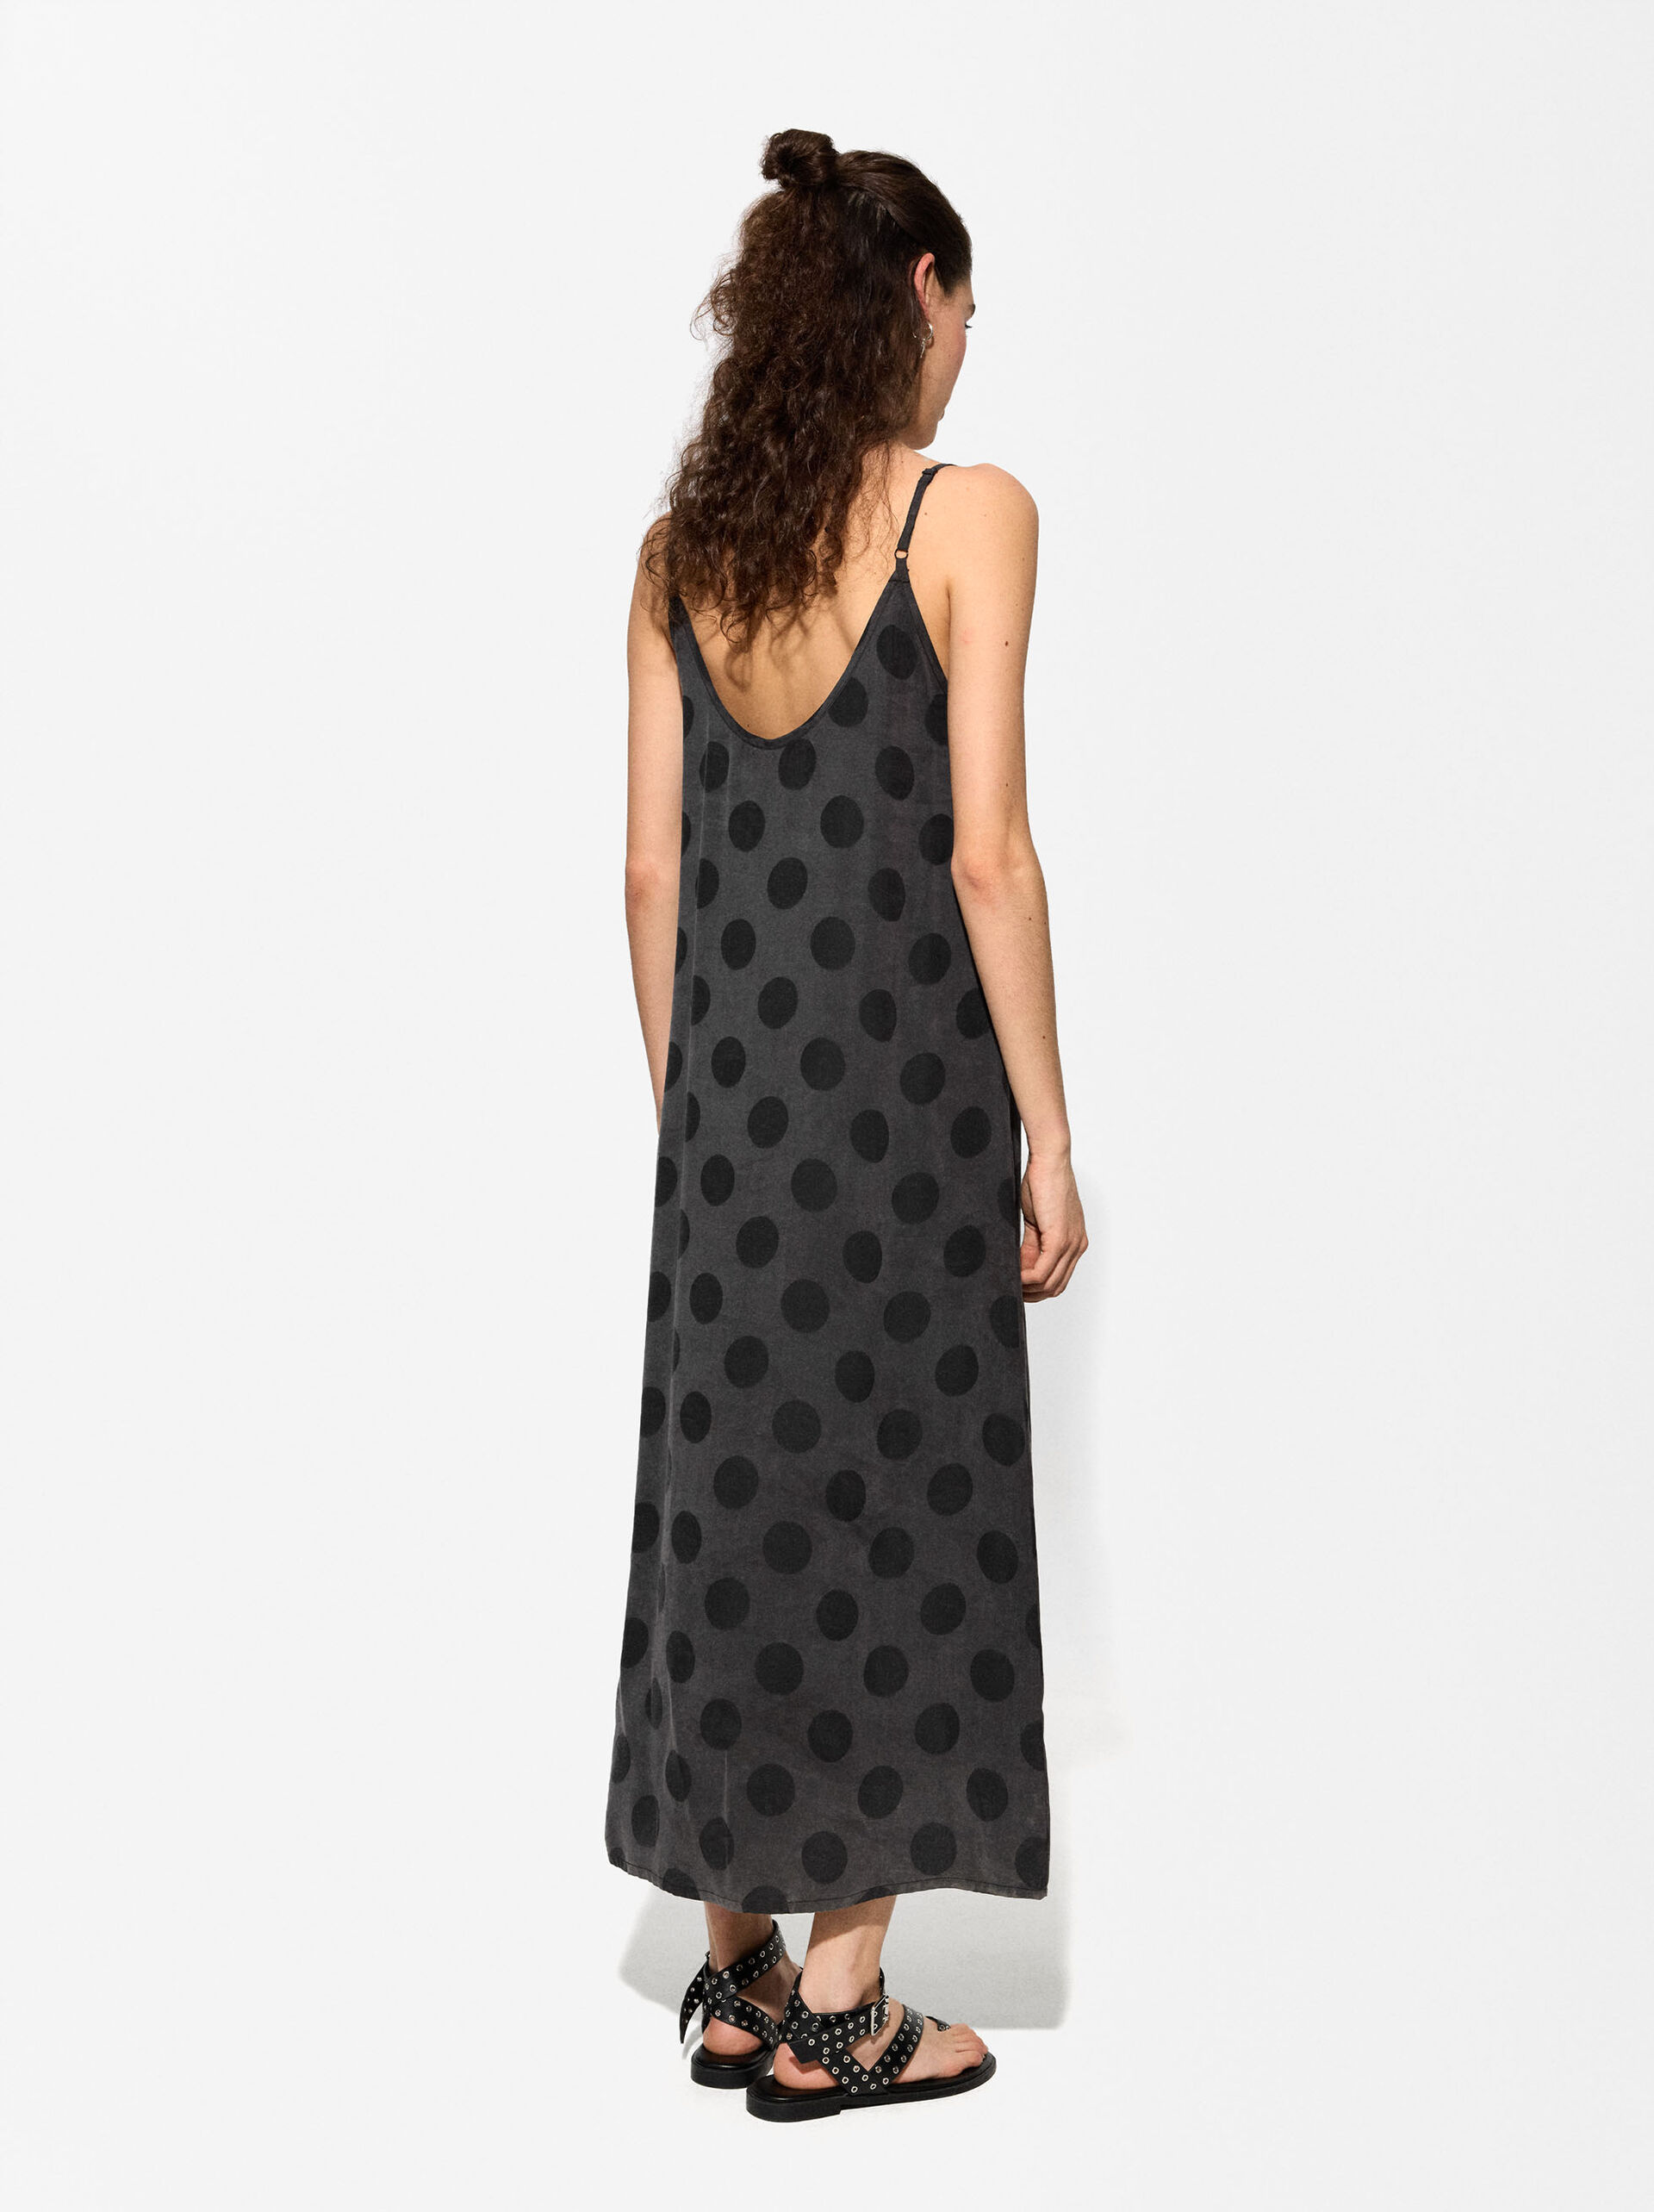 Polka Dot Strappy Dress image number 4.0